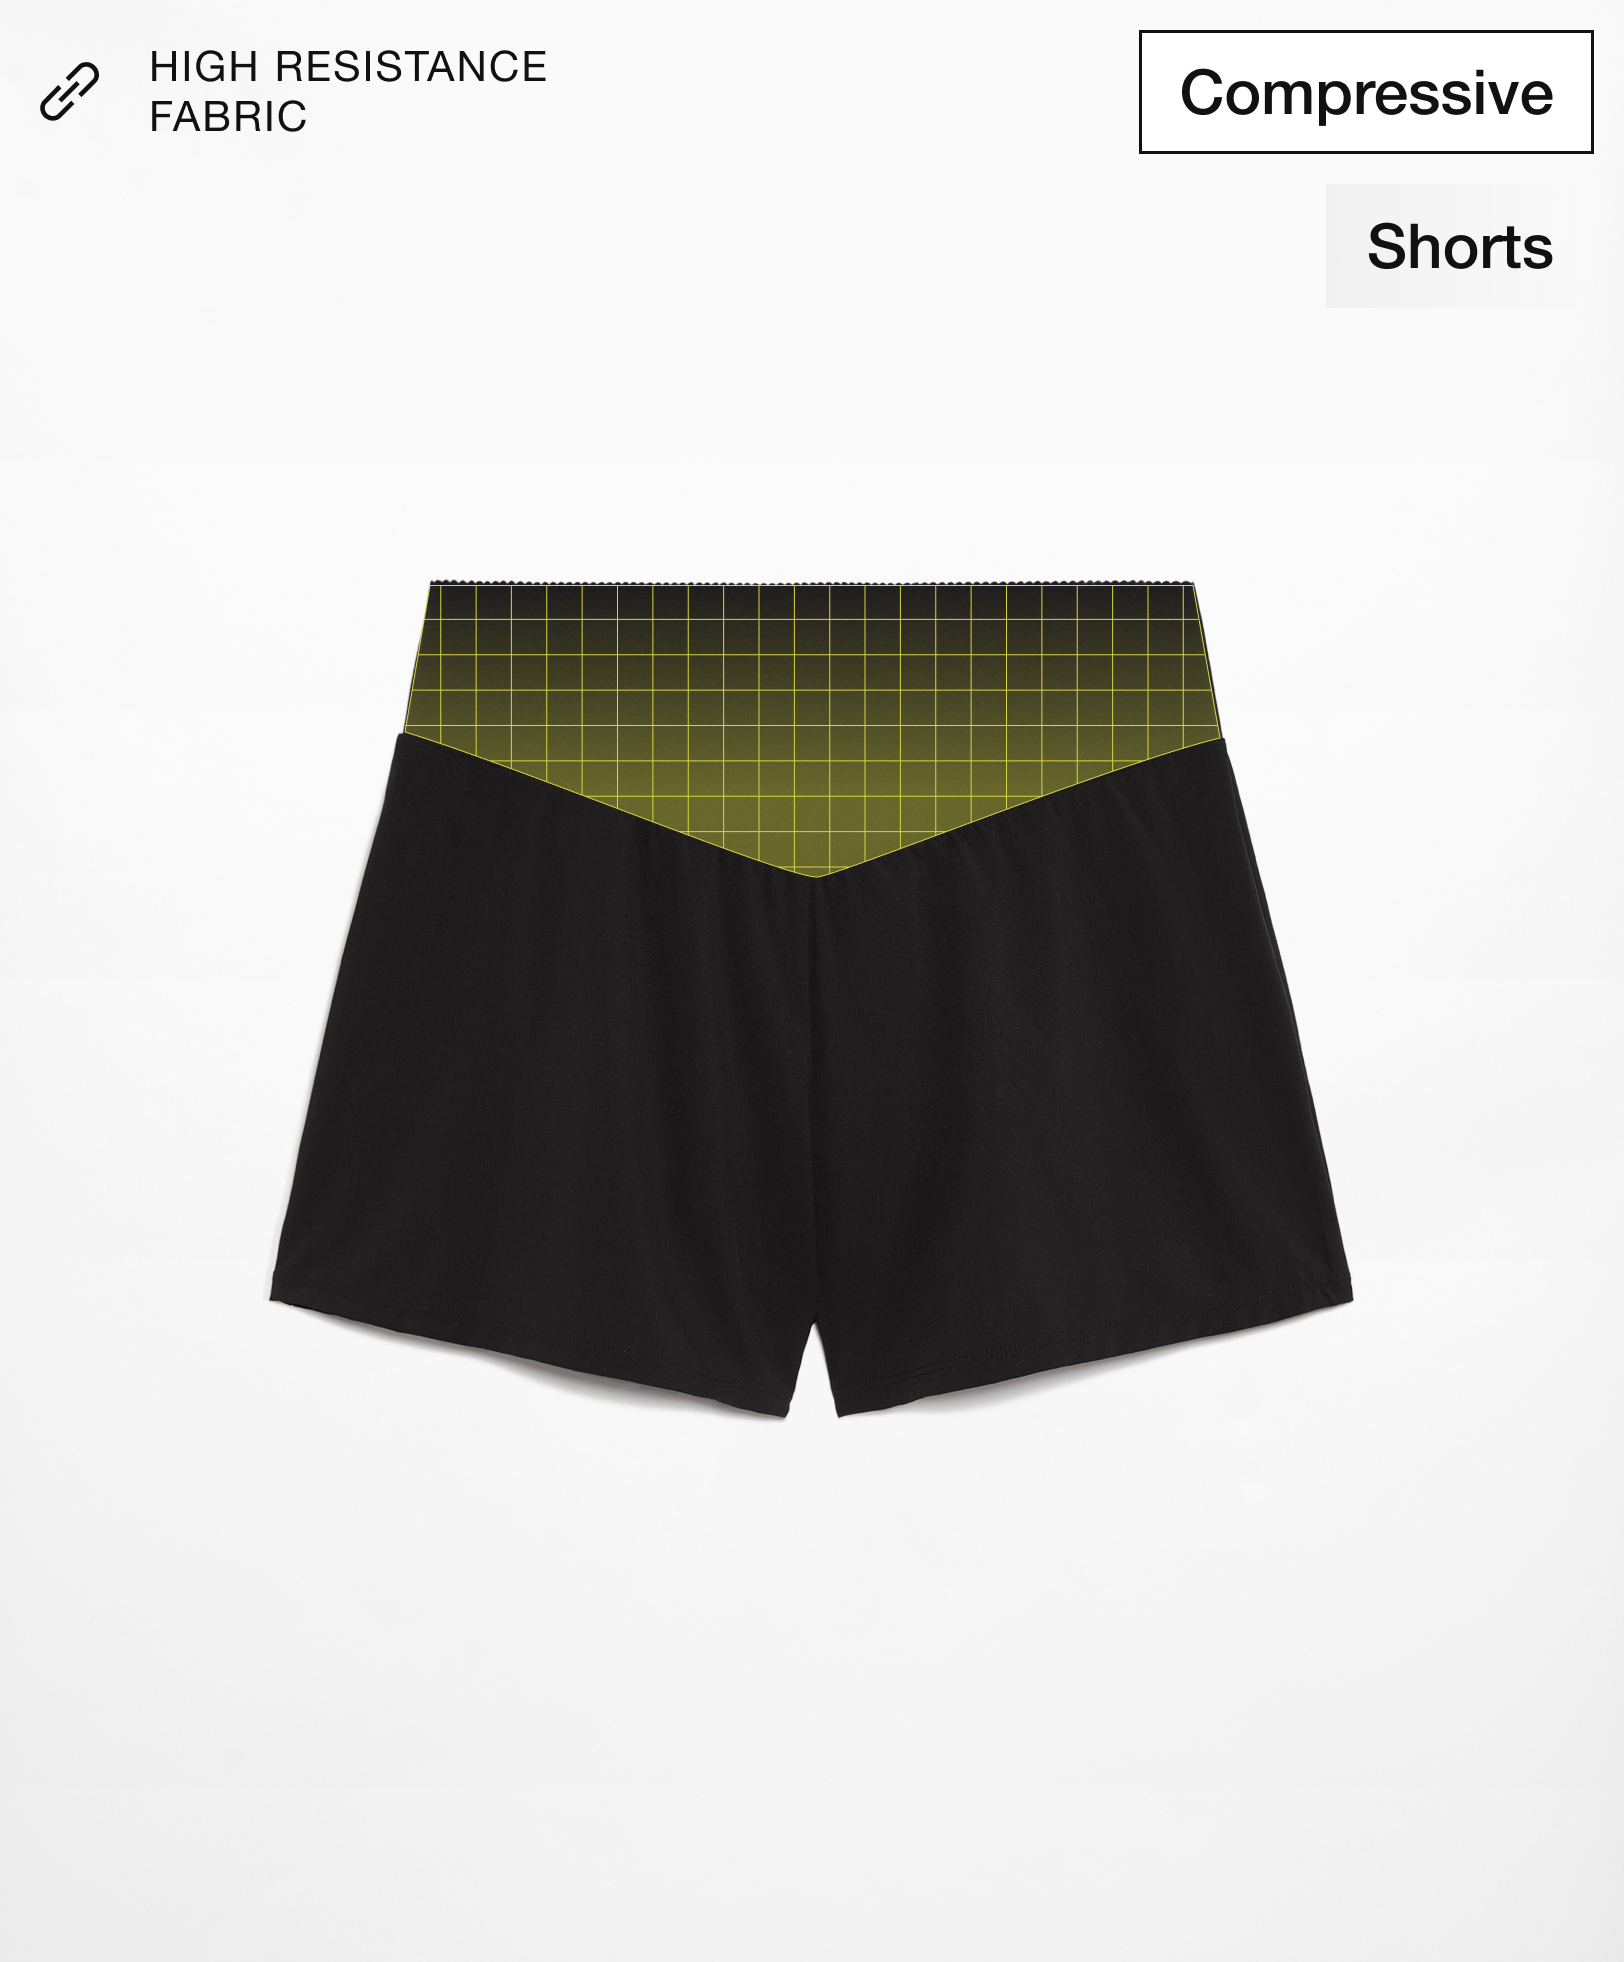 Shorts compressive pocket 10 cm